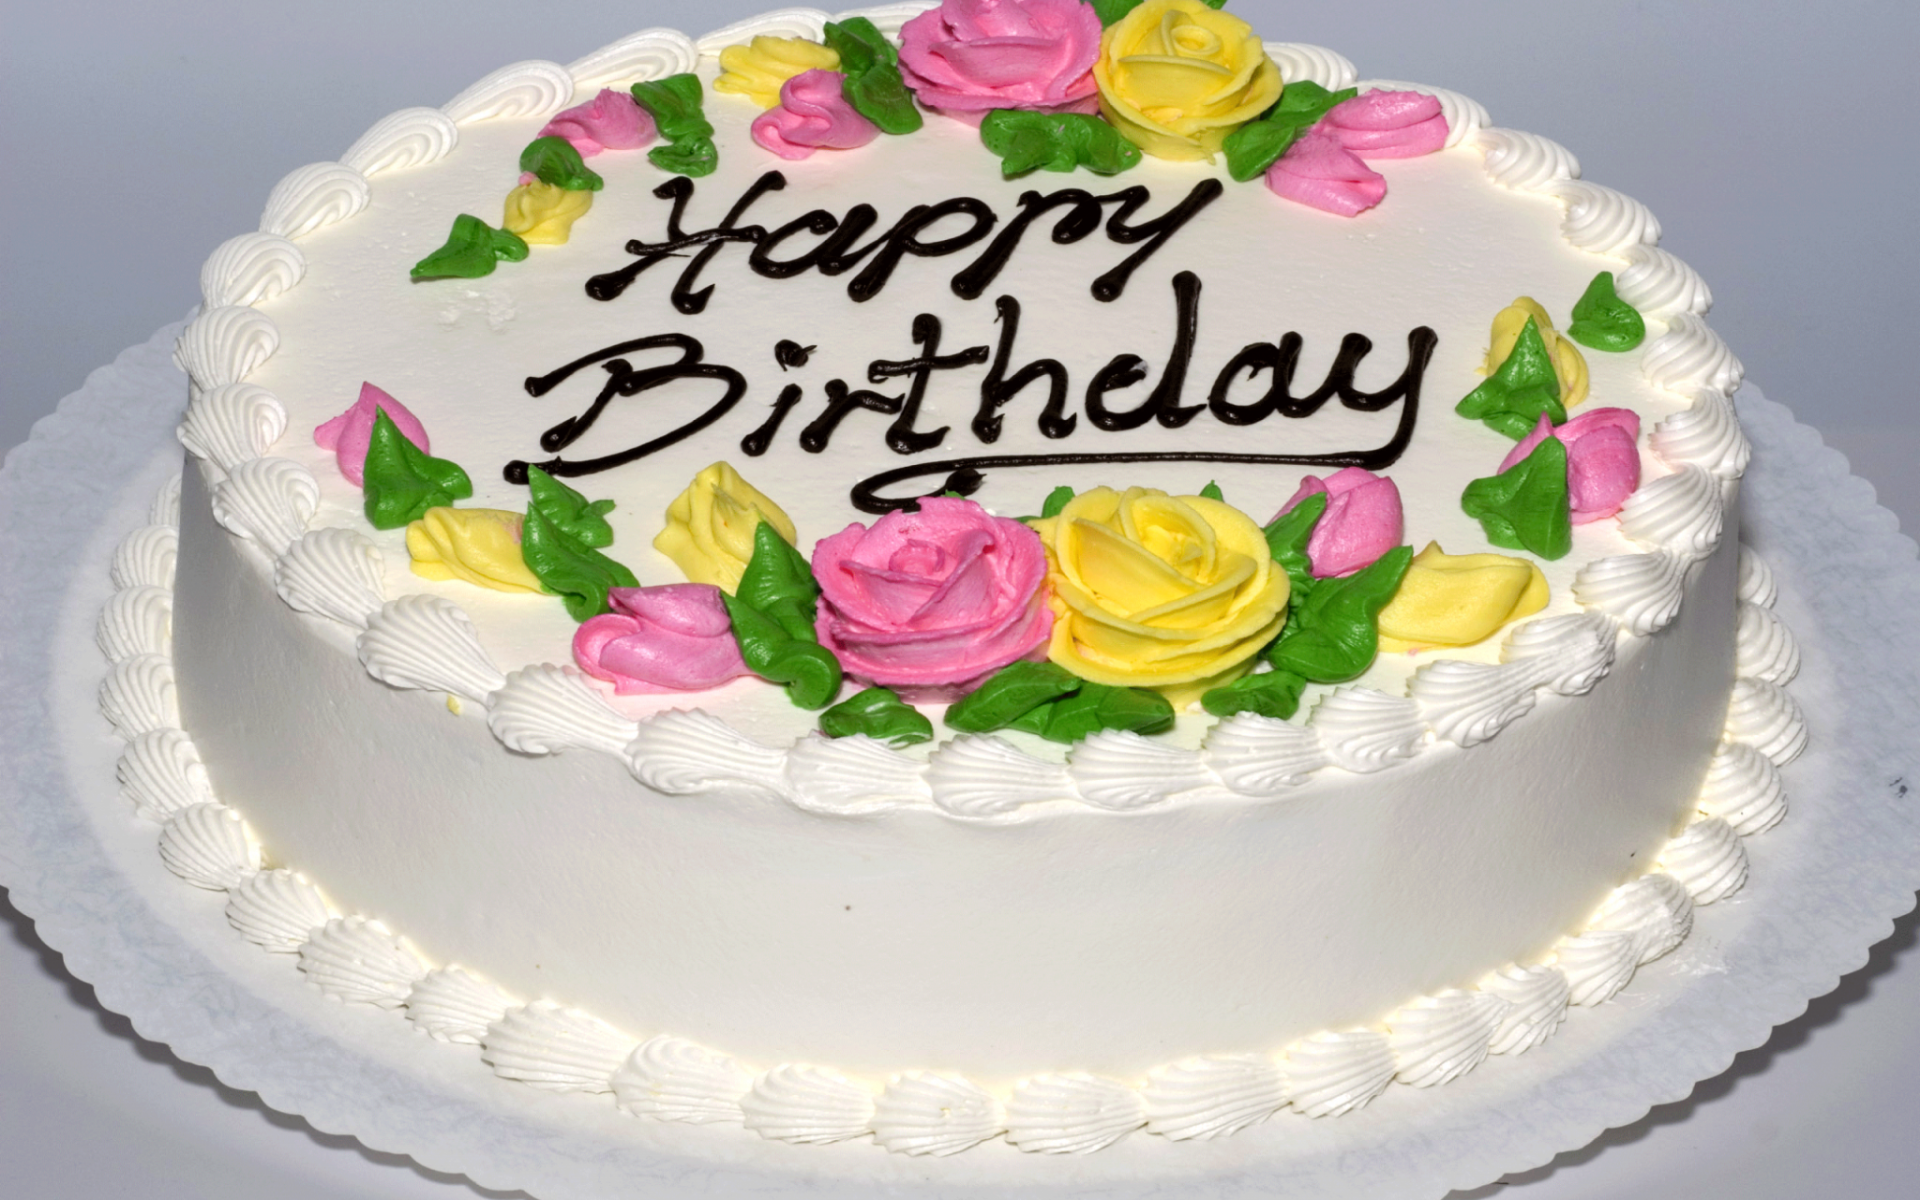 Beautiful birthday cake with roses